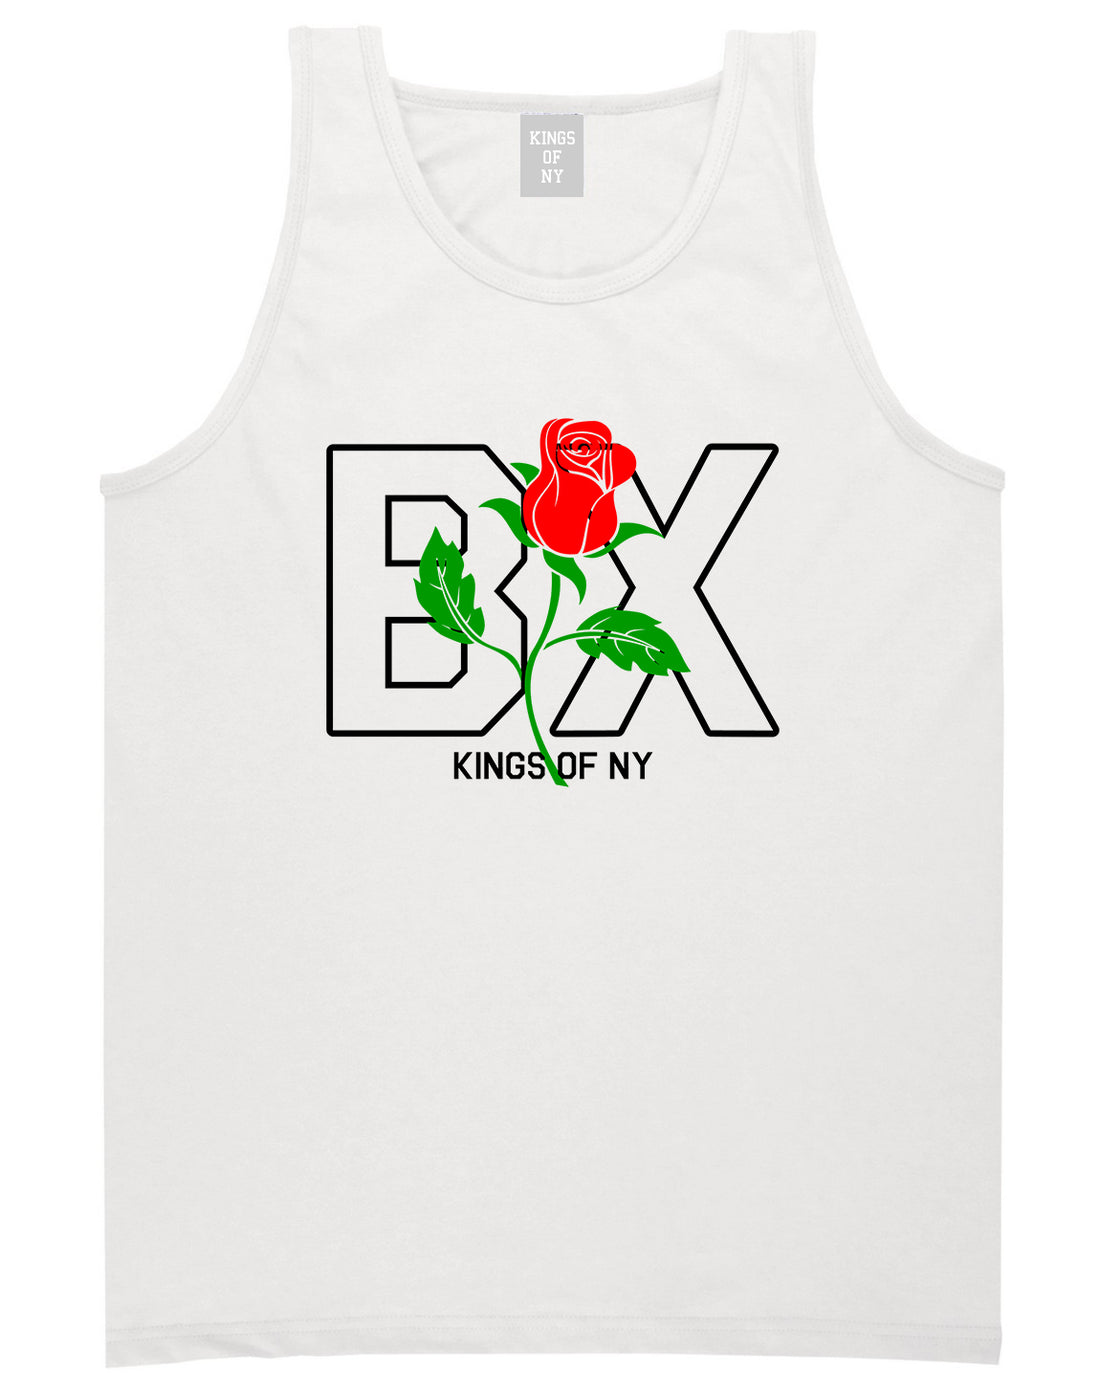 Rose BX The Bronx Kings Of NY Mens Tank Top T-Shirt White